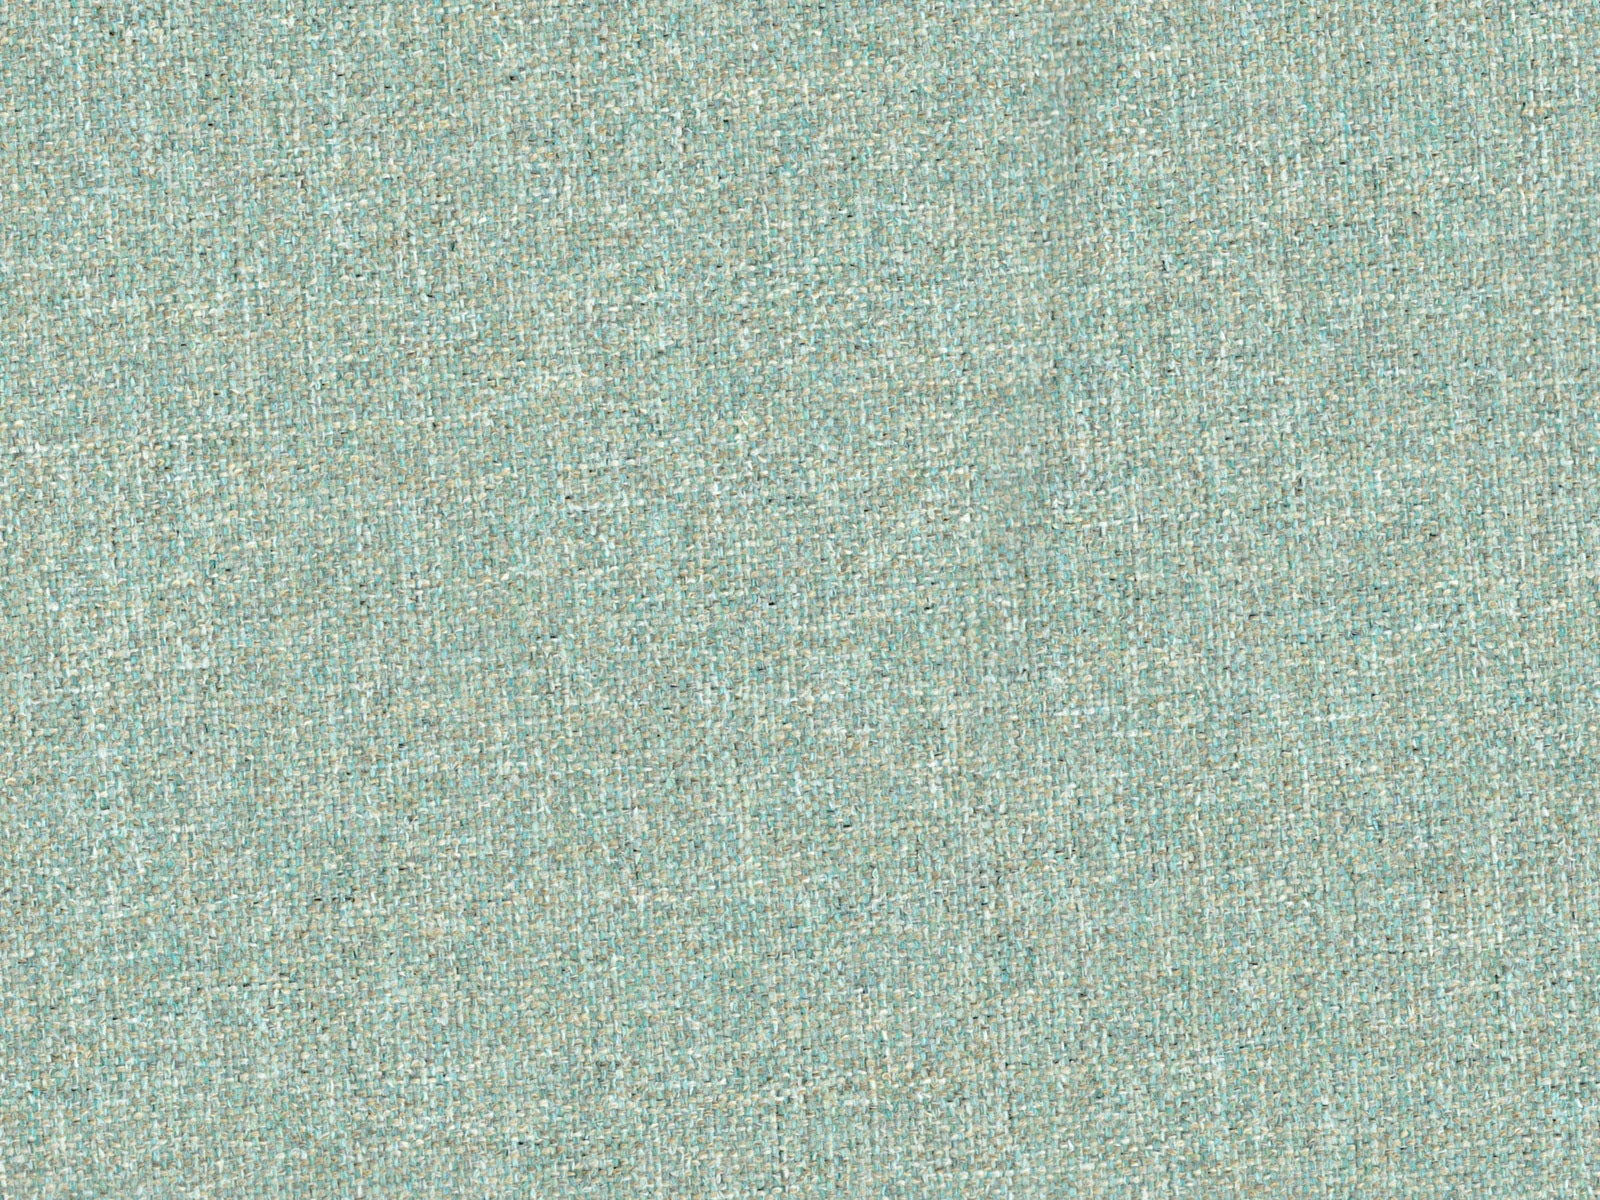 Catania Fabric Samples - Rydan Interiors